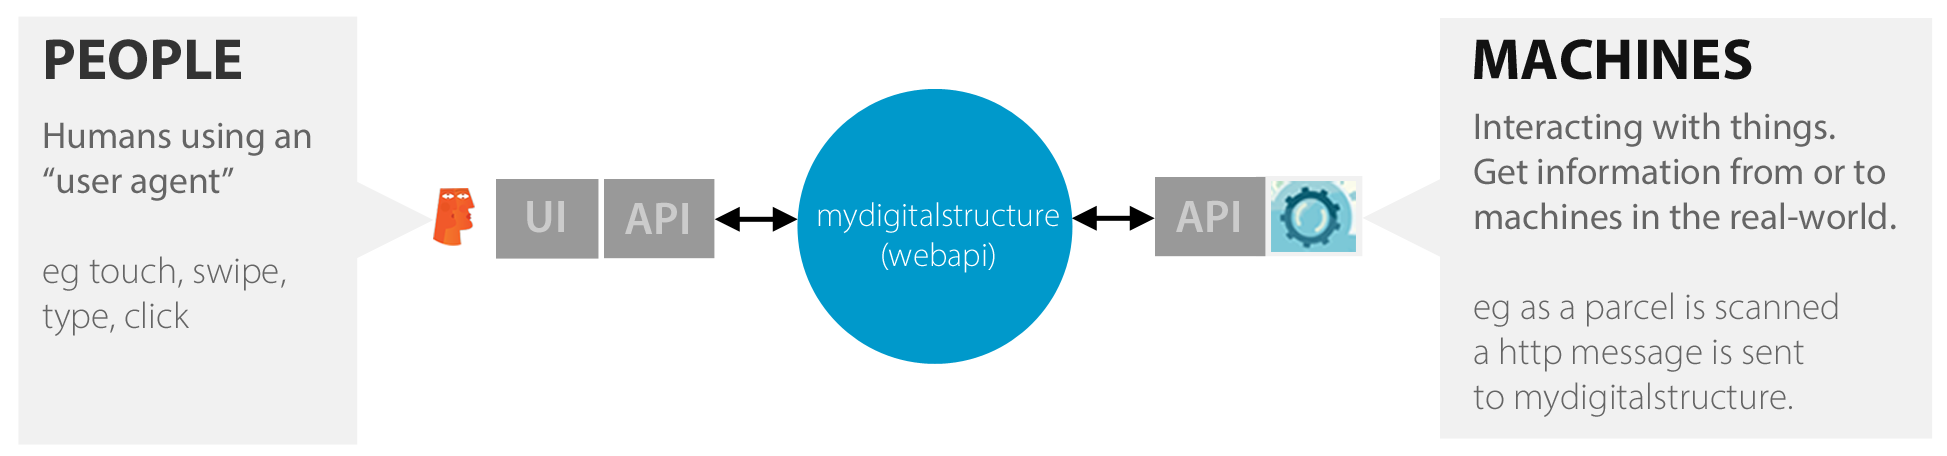 ibCom_mydigitalstructrure_Internet_of_things_1.0.